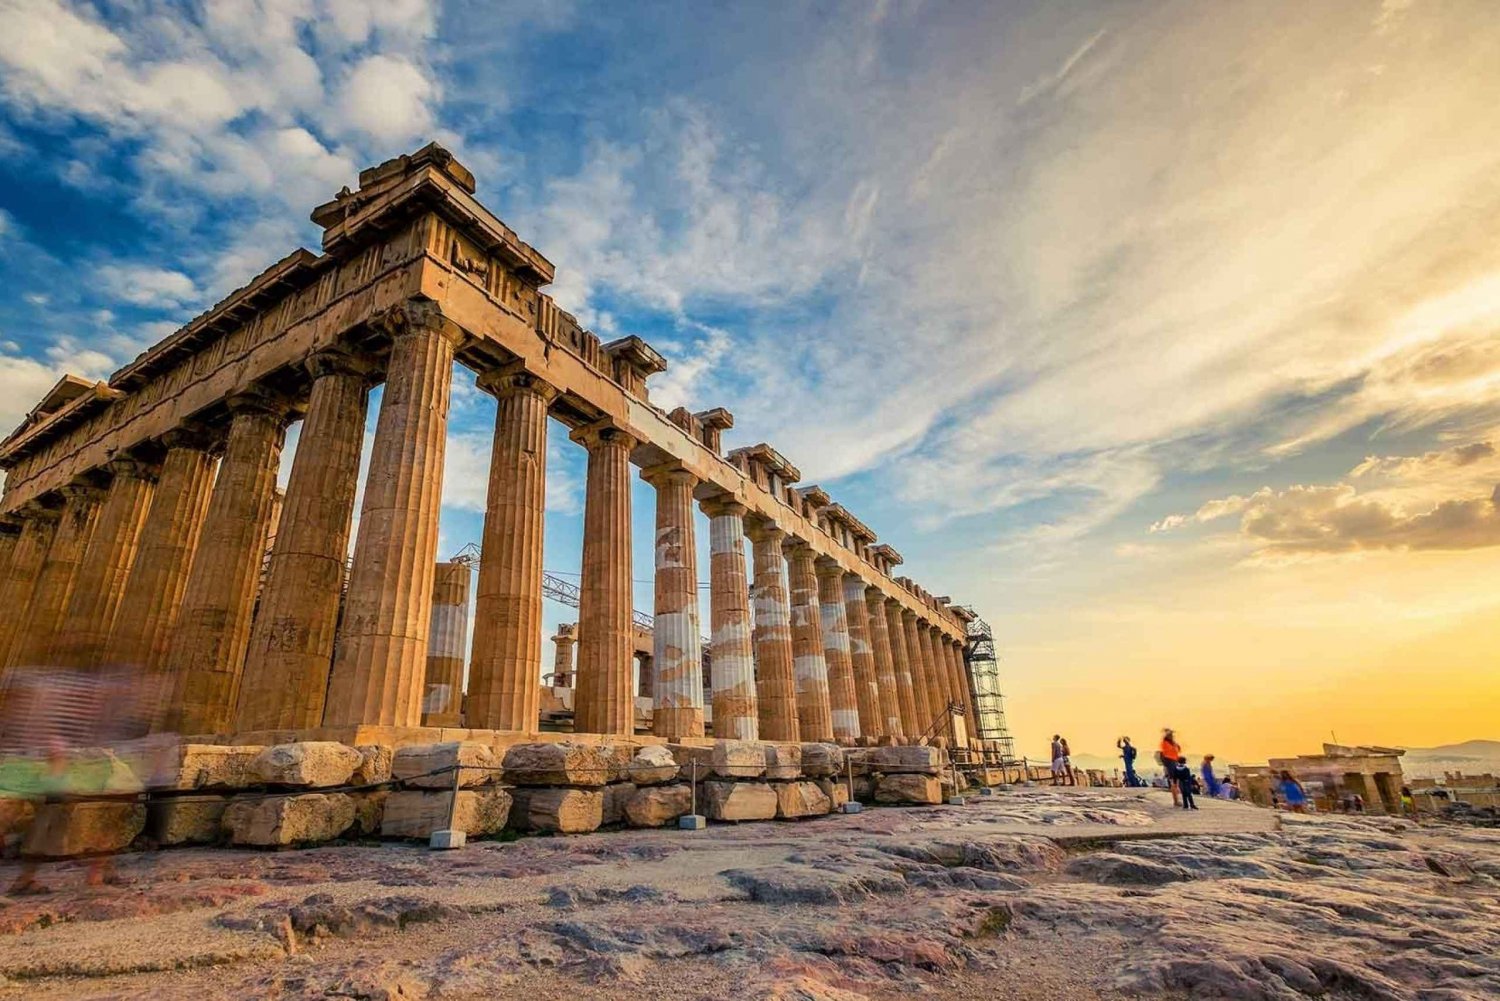 Athen: Sightseeingtur med hopp-over-køen-inngang til Akropolis